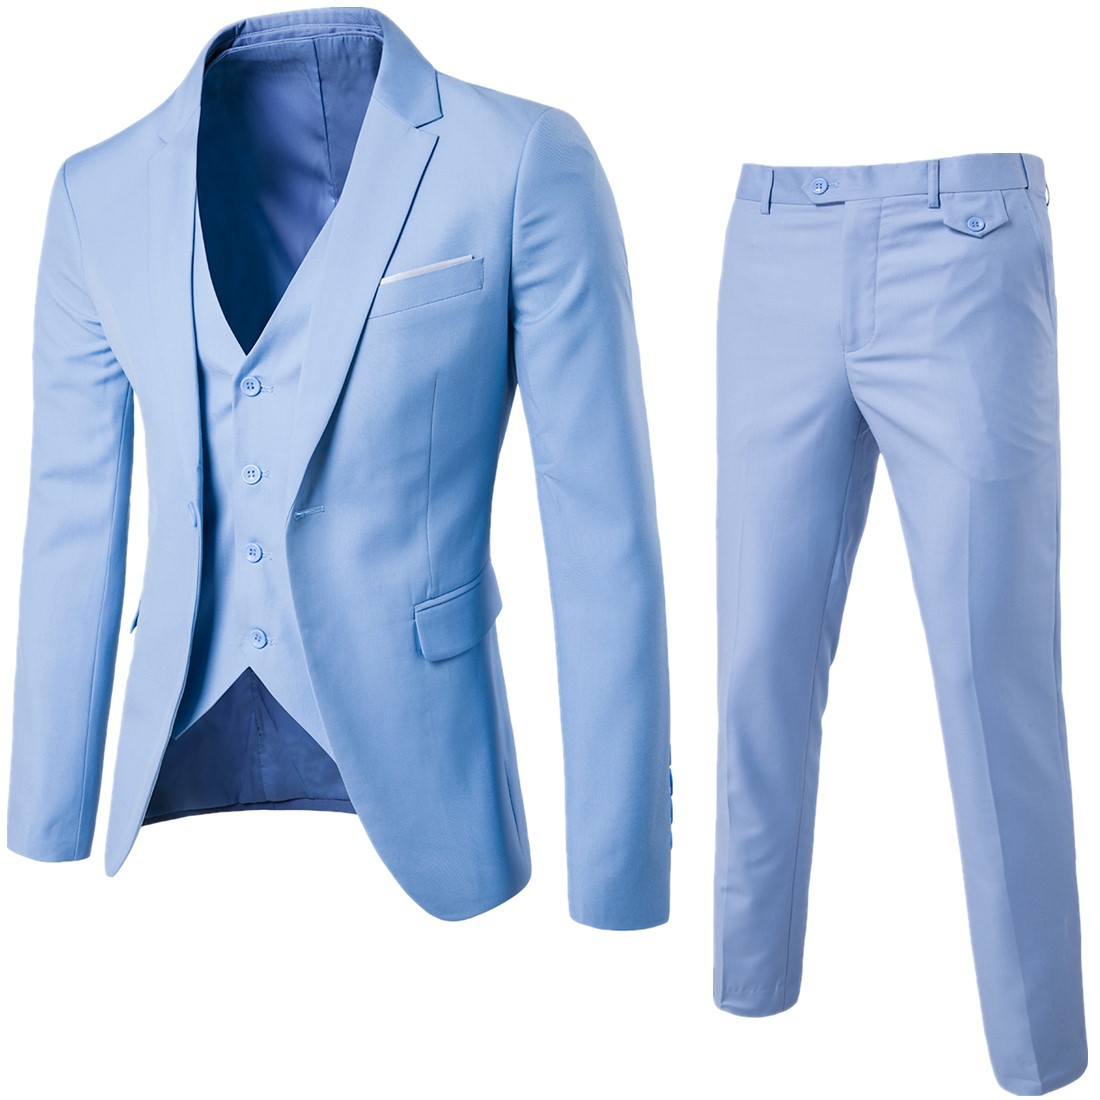 Suit Set Men's Korean Style Slim-fit Casual Suit Two-piece Business Professional Formal Dress New Best Man Wedding Dress